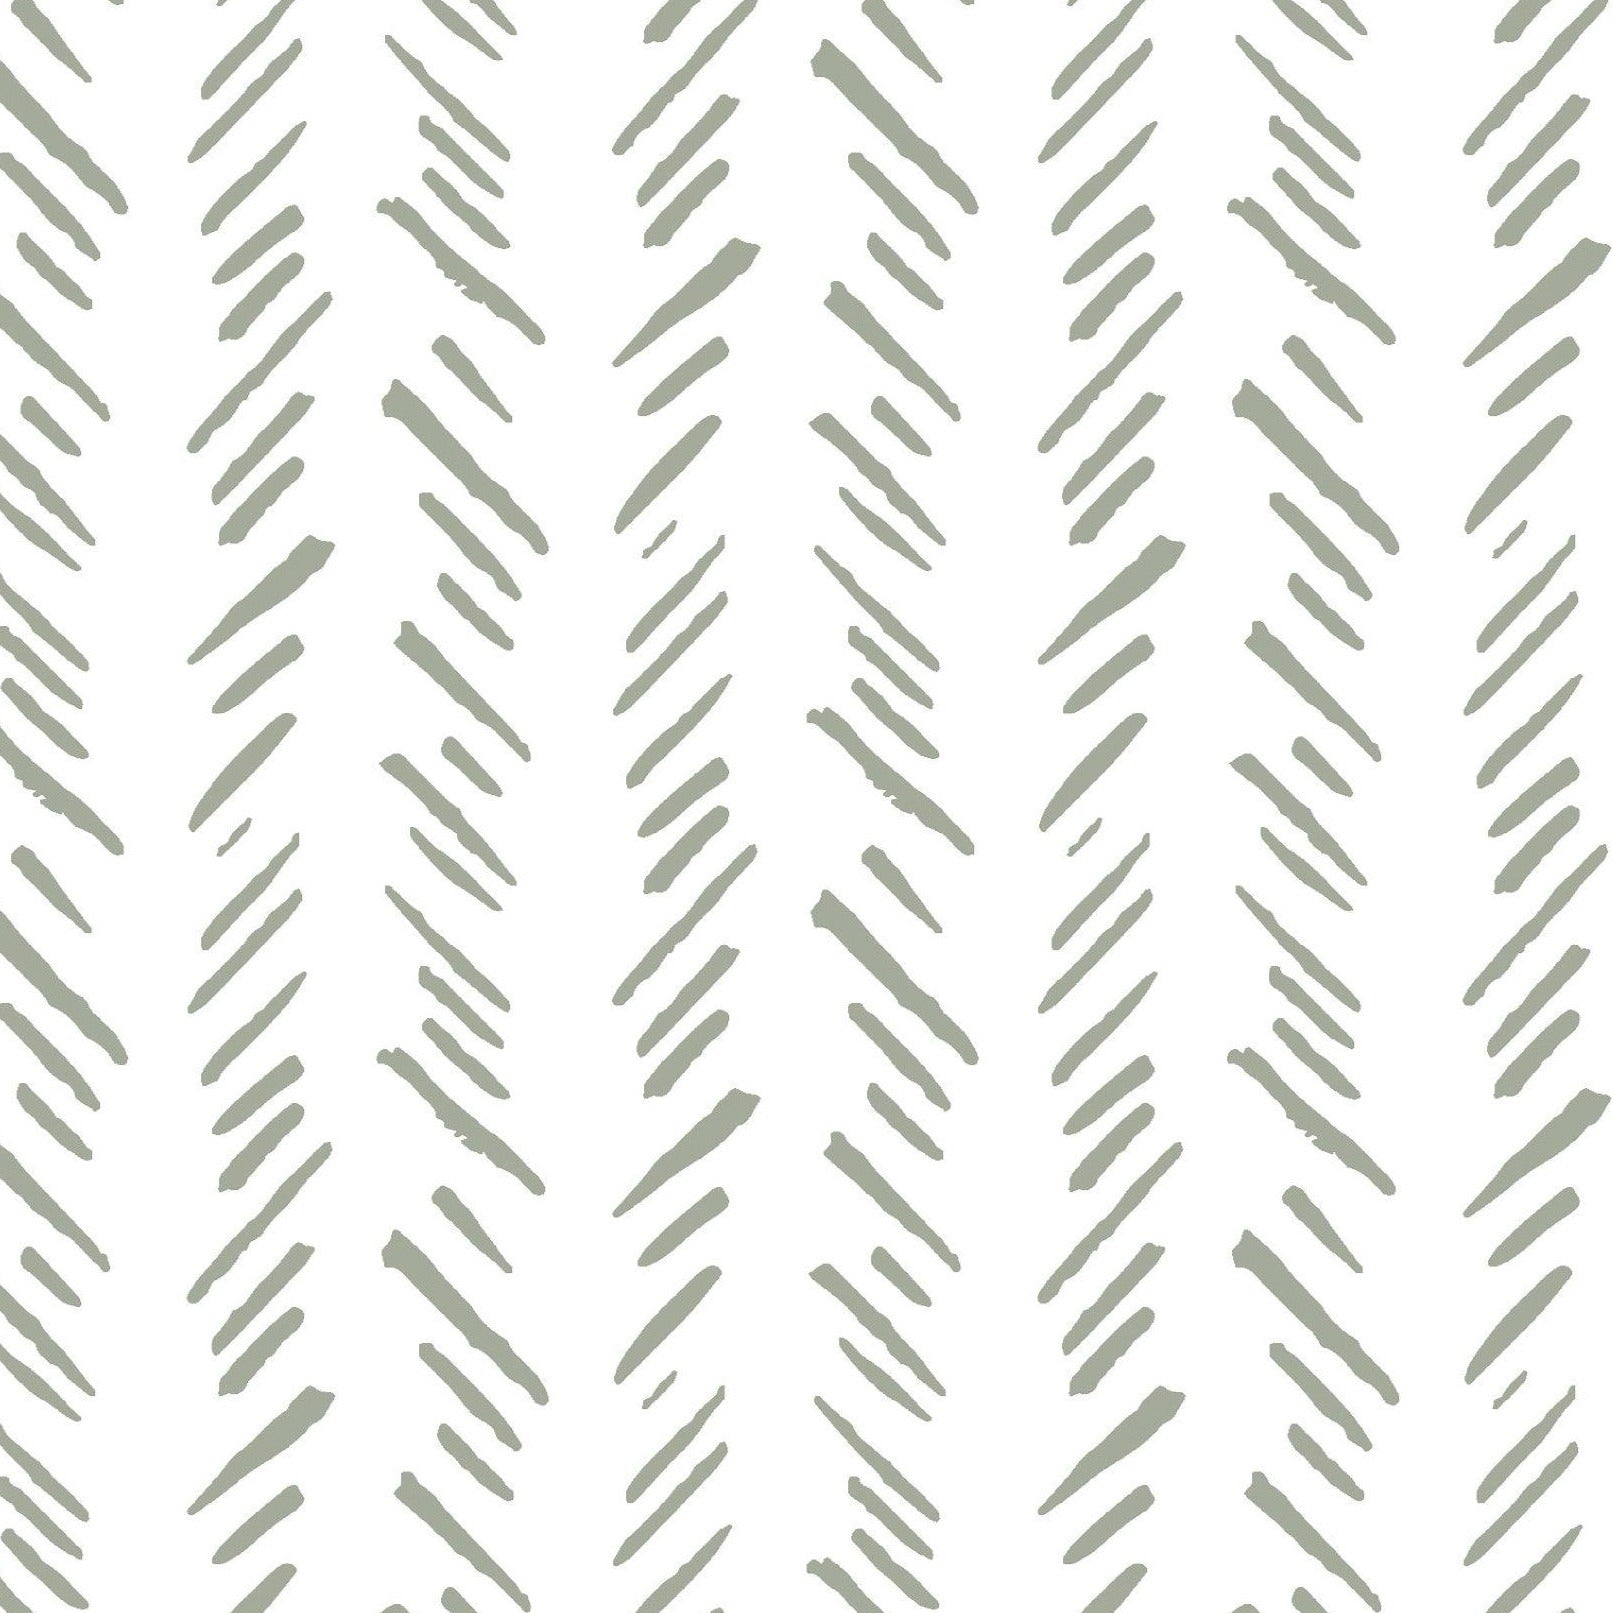 Sage Green Leaf Pattern | Stripes Pattern Wrapping Paper Sheets | Zazzle